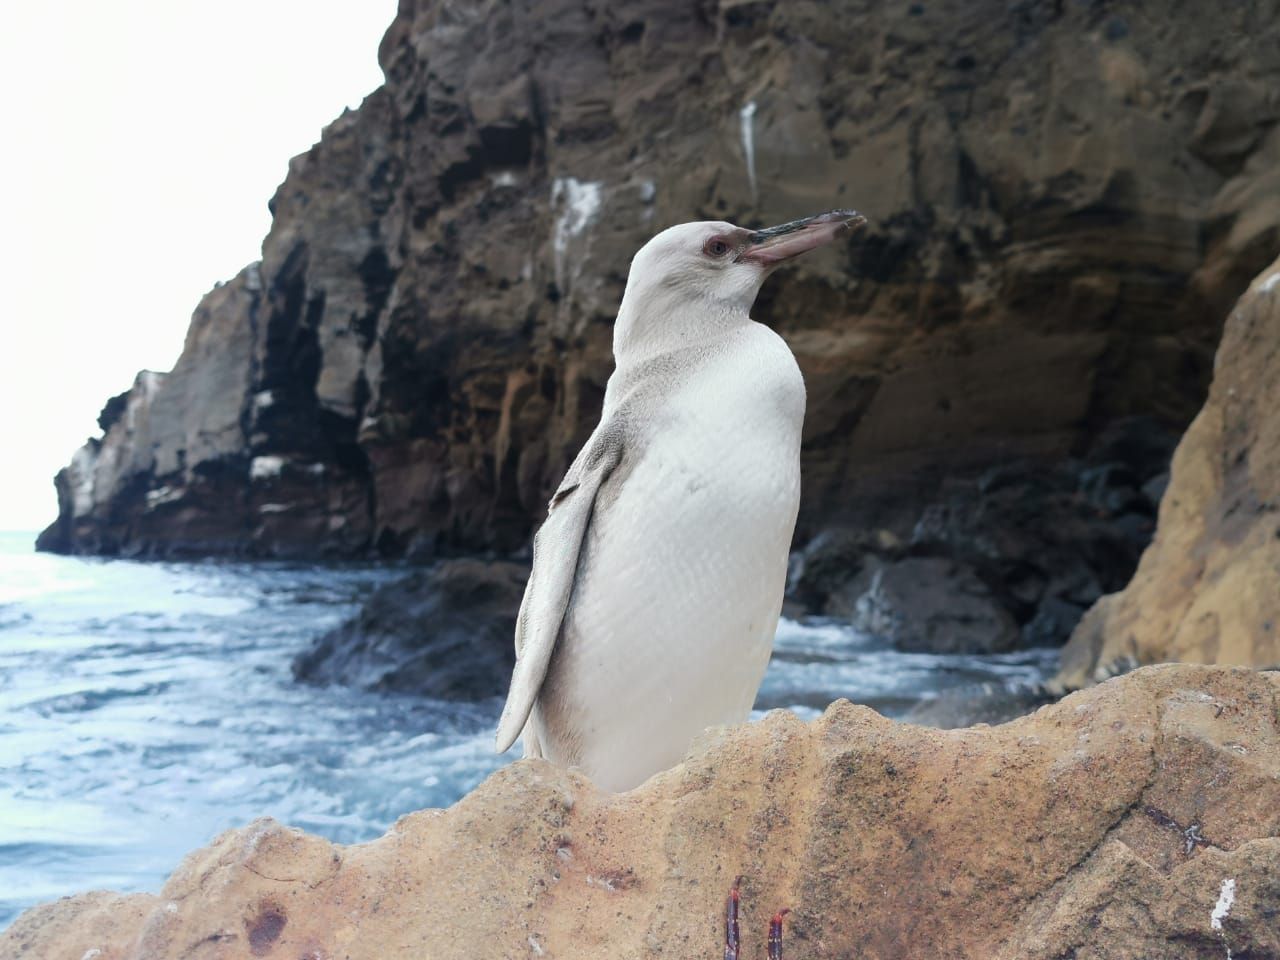 Un "raro" pingüino blanco fue descubierto en islas ecuatorianas de Galápagos
